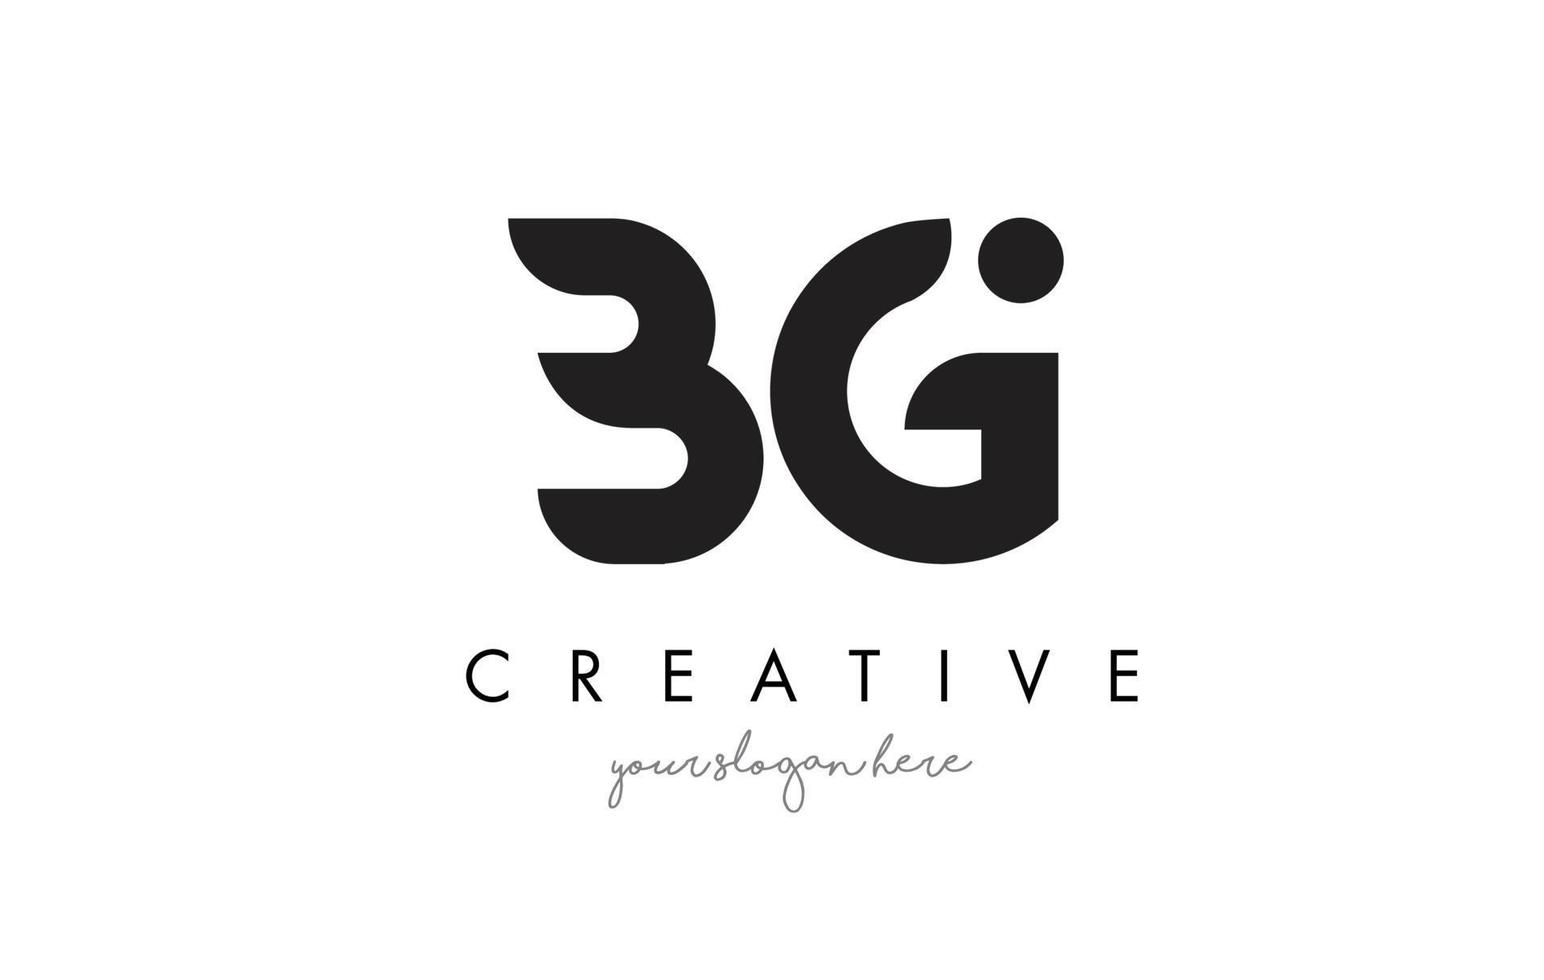 BG Letter Logo Design with Creative Modern Trendy Typography. vector